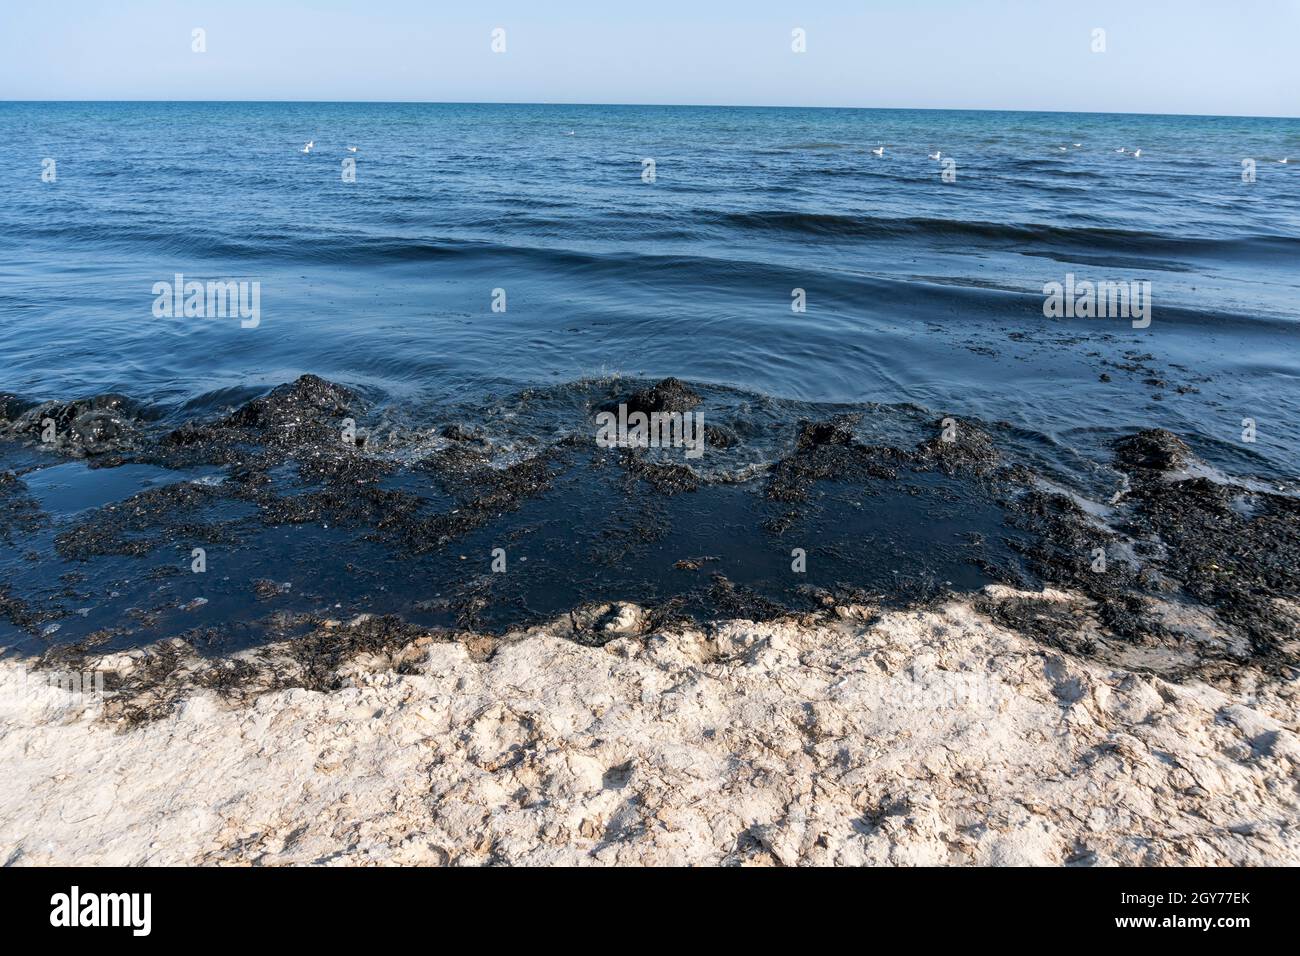 Oil pollution In the Sea at Coastline. Black Color Sea Waves on white Sand Stock Photo